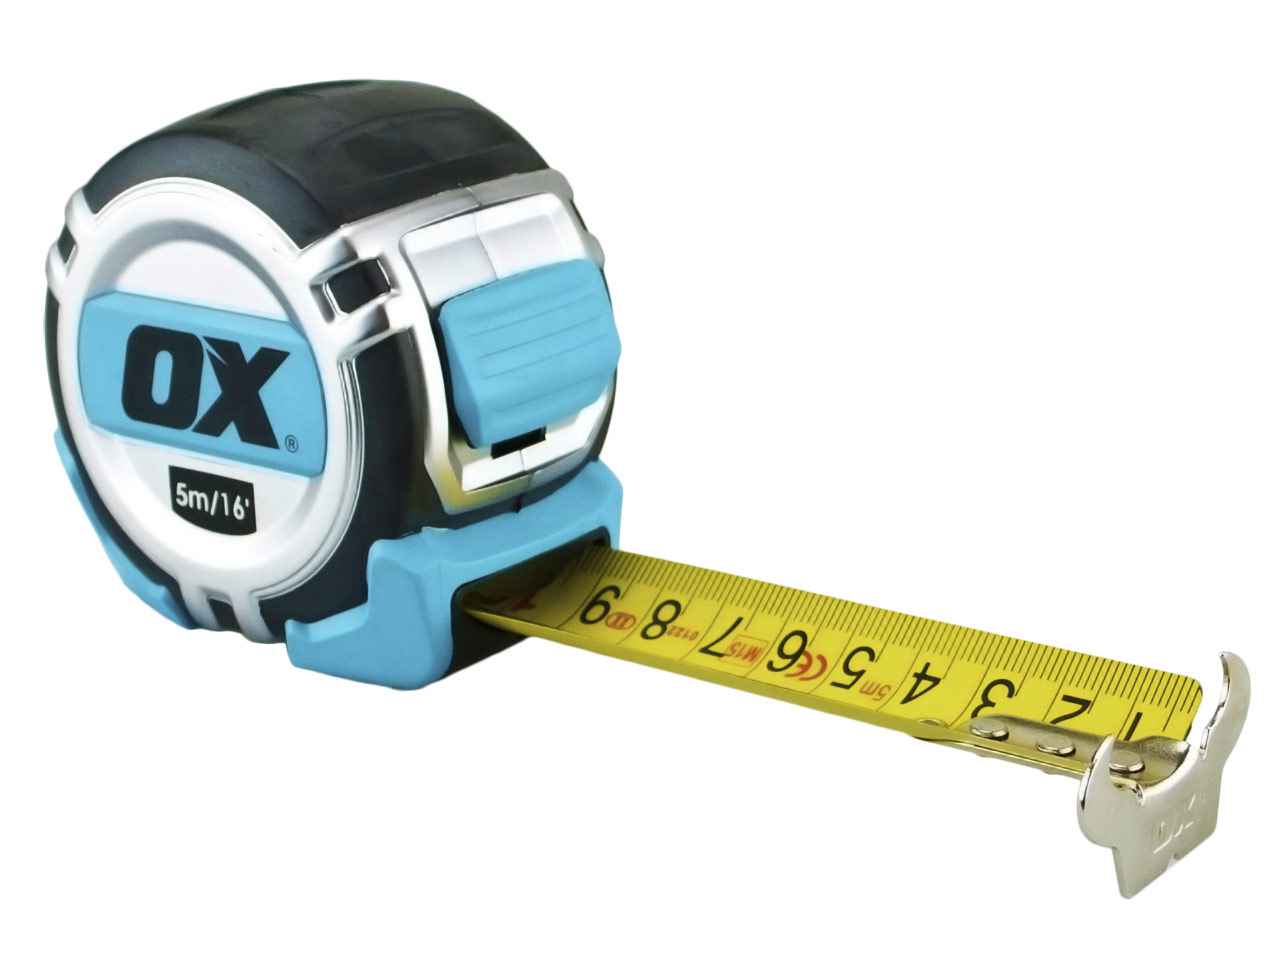 ox tape measure